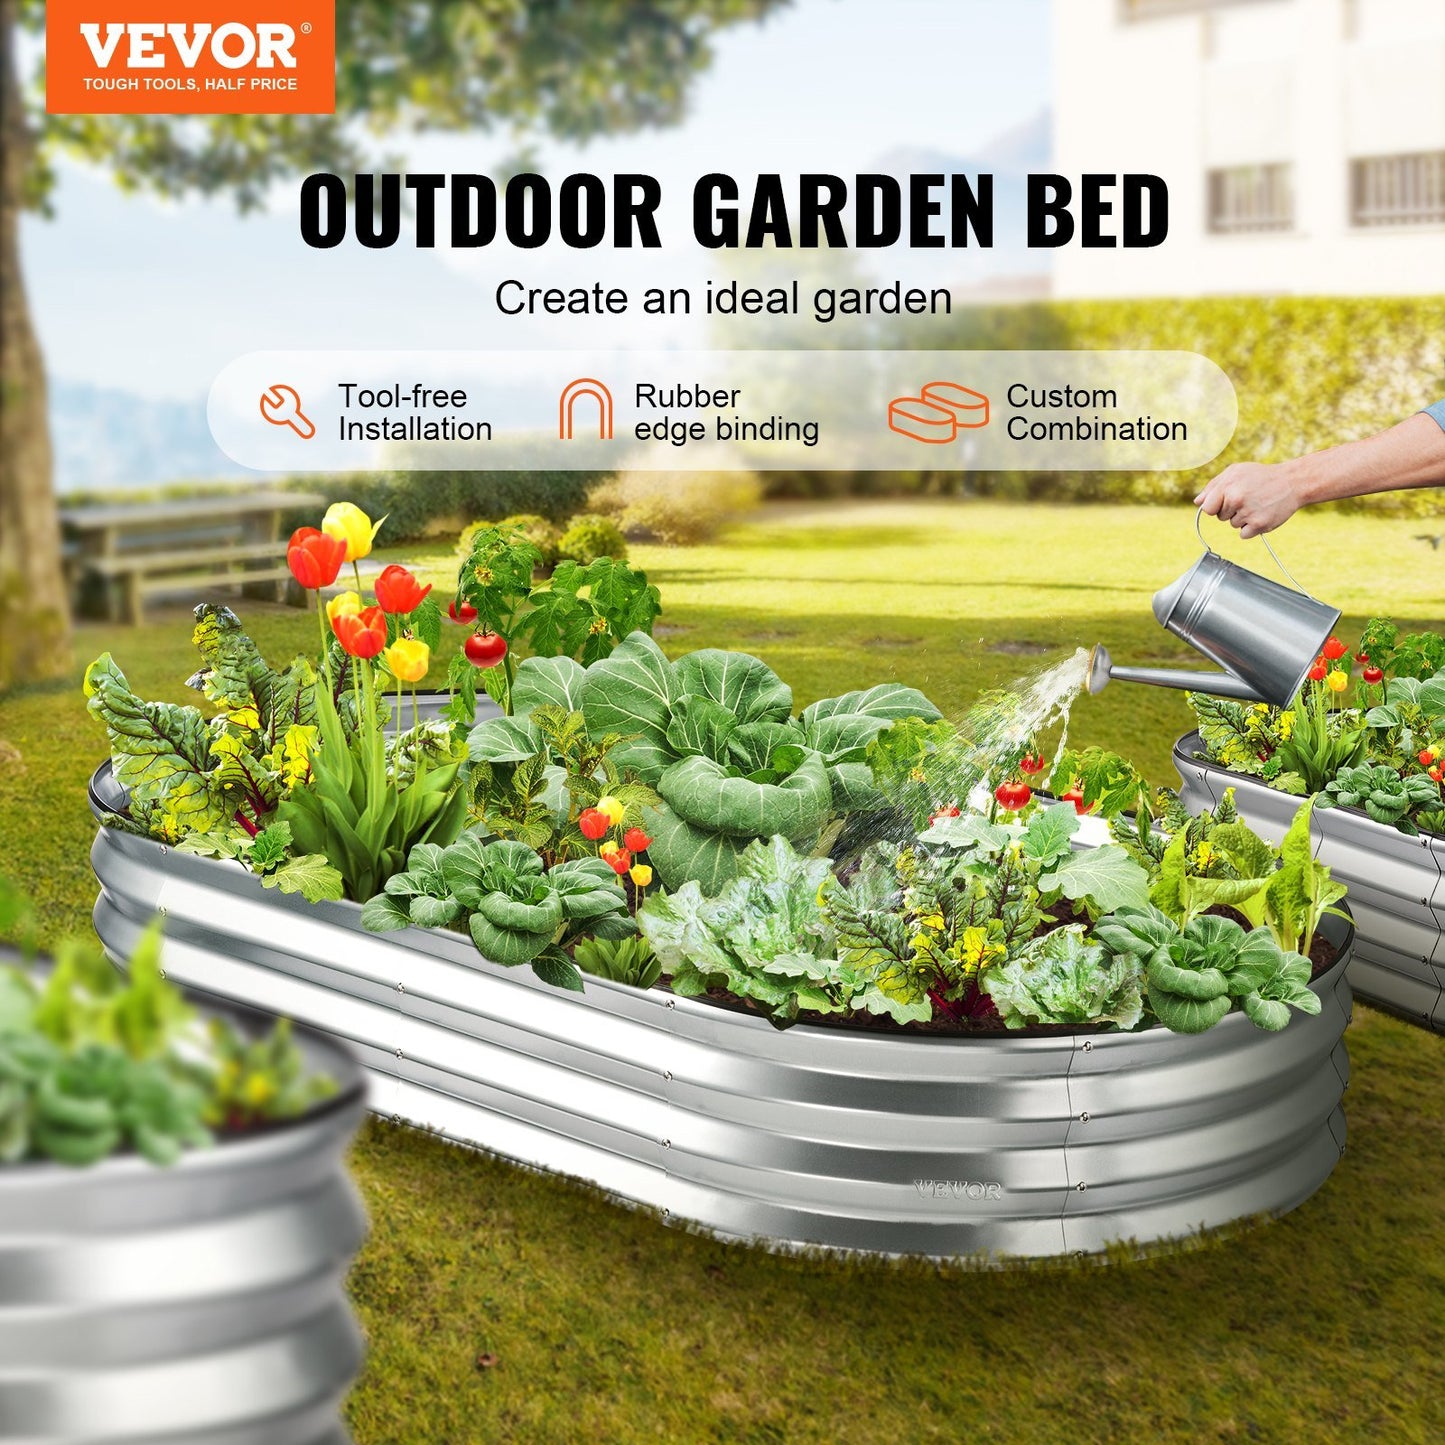 Raised Garden Bed, 6x3x1 foot Metal Planter Box for Growing Flowers/Vegetables/Herbs in Backyard/Garden/Patio/Balcony, Silver